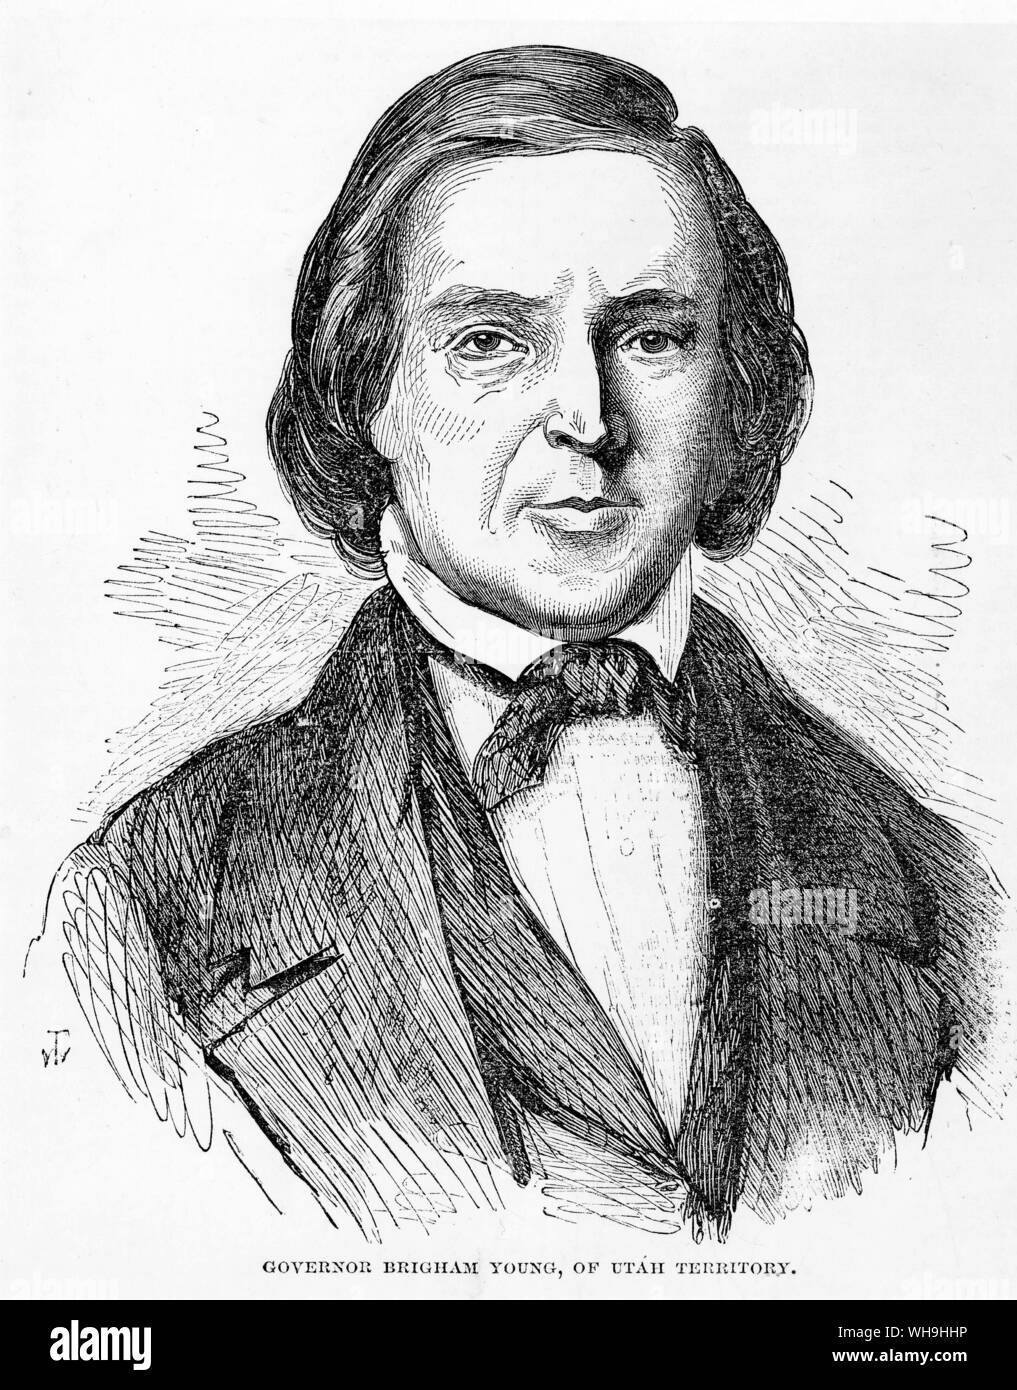 Gouverneur Brigham Young (1801-1877) von Utah Territorium. Uns Mormon religiöser Führer. Stockfoto